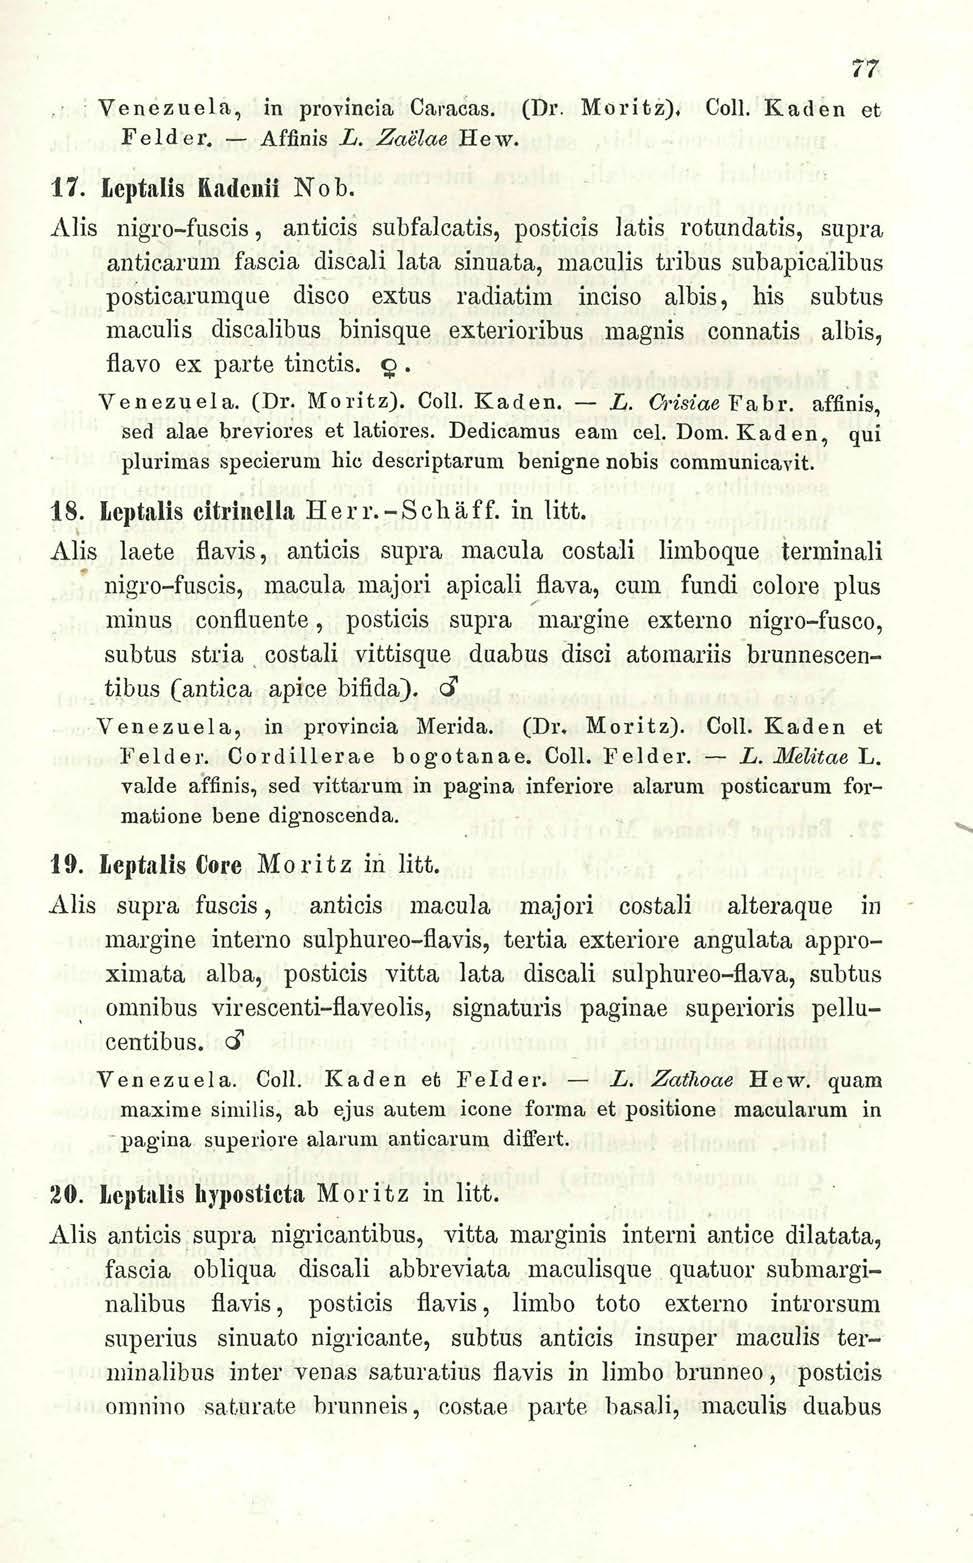 ,'. : Venezuela, in provincia Caracas. (Dr. Moritz), Coll. Karten et Felder. Affinis L. Zaelae Hew. 17. Leptalis Kadenii Nob.